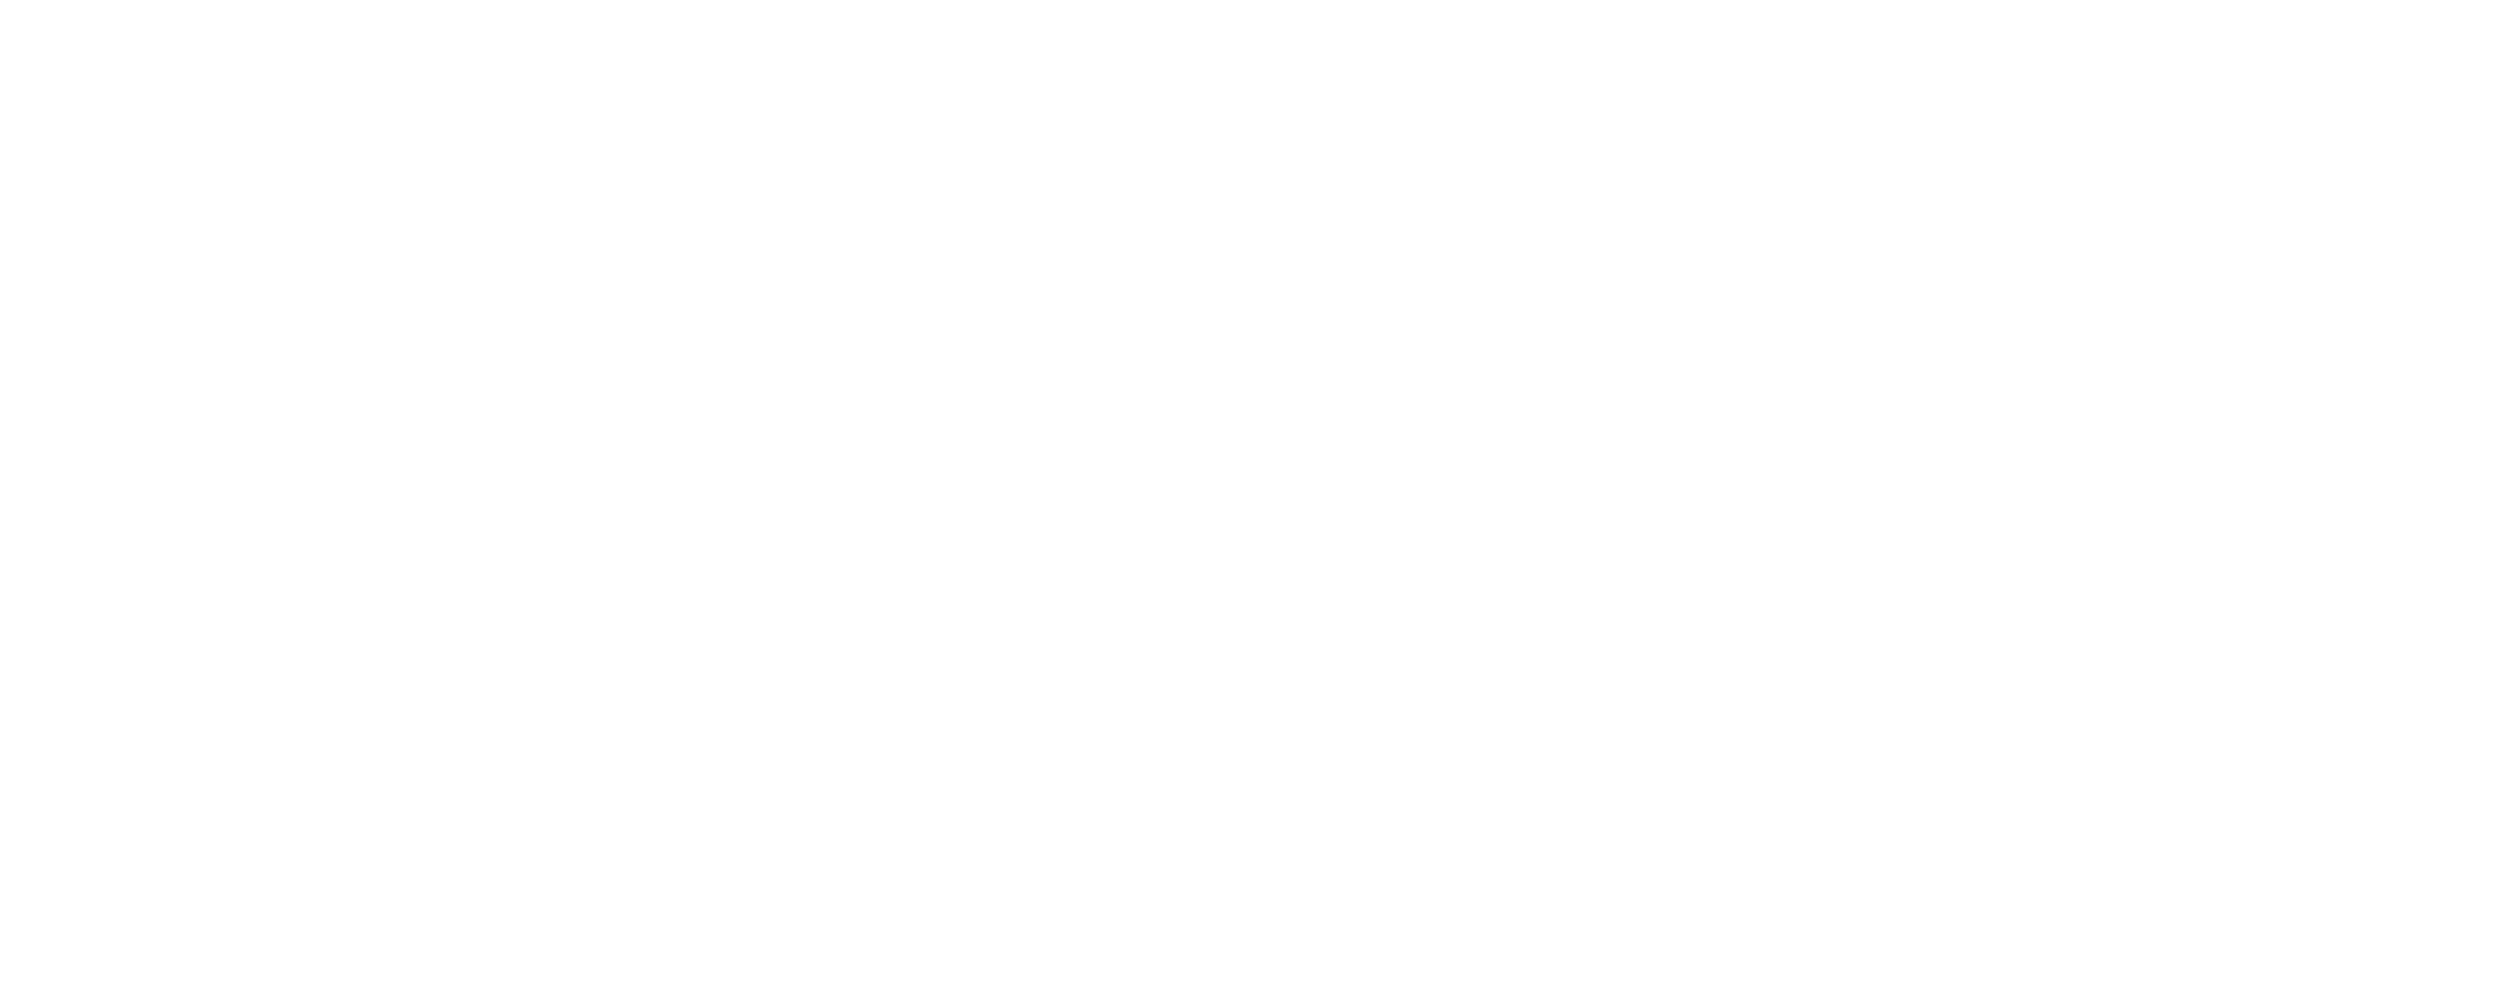 Curricula Logo